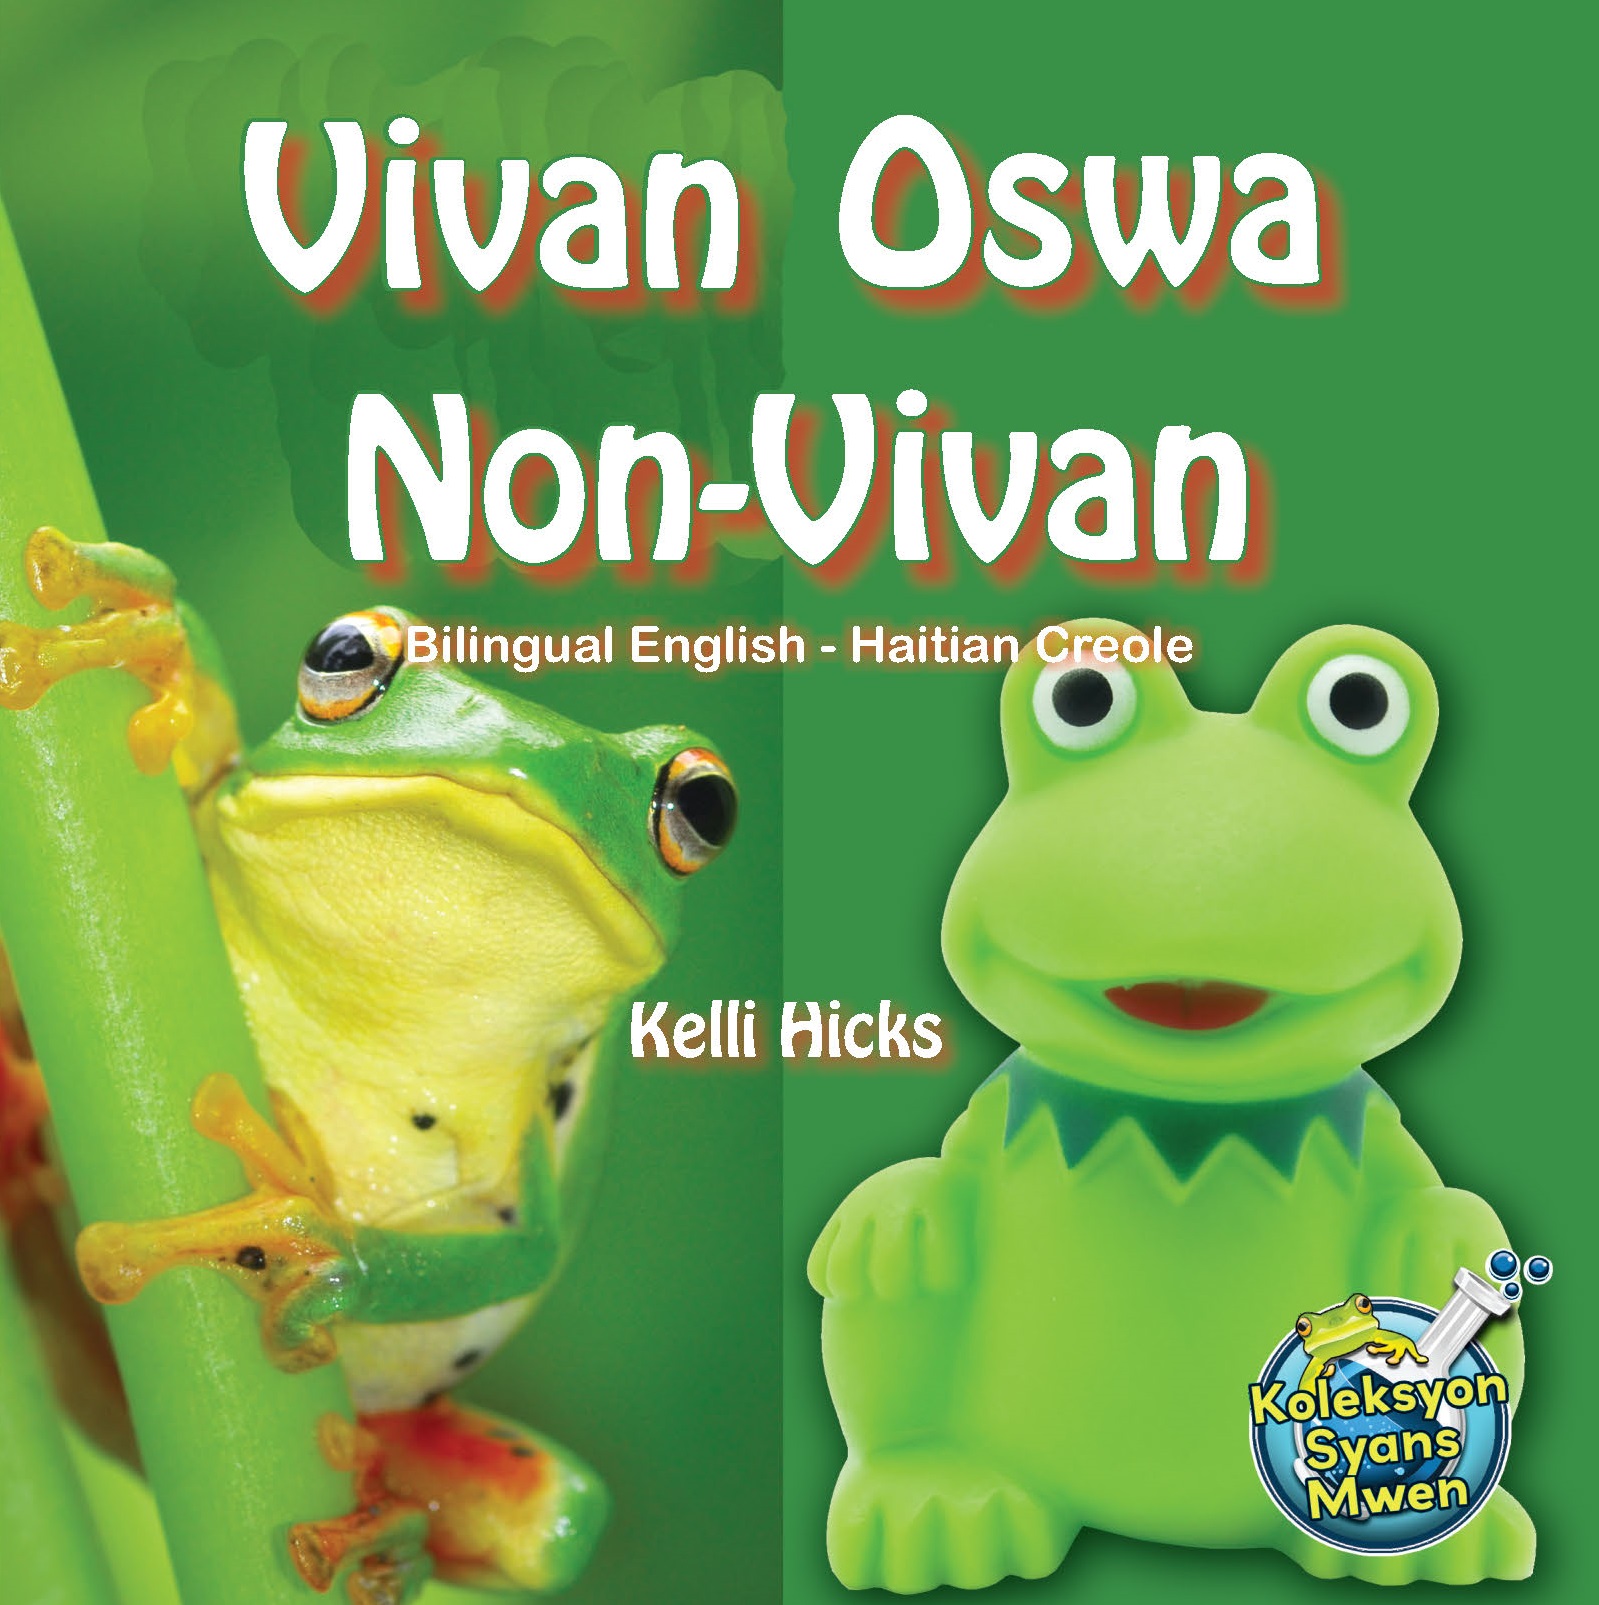 Vivan oswa Nonvivan 